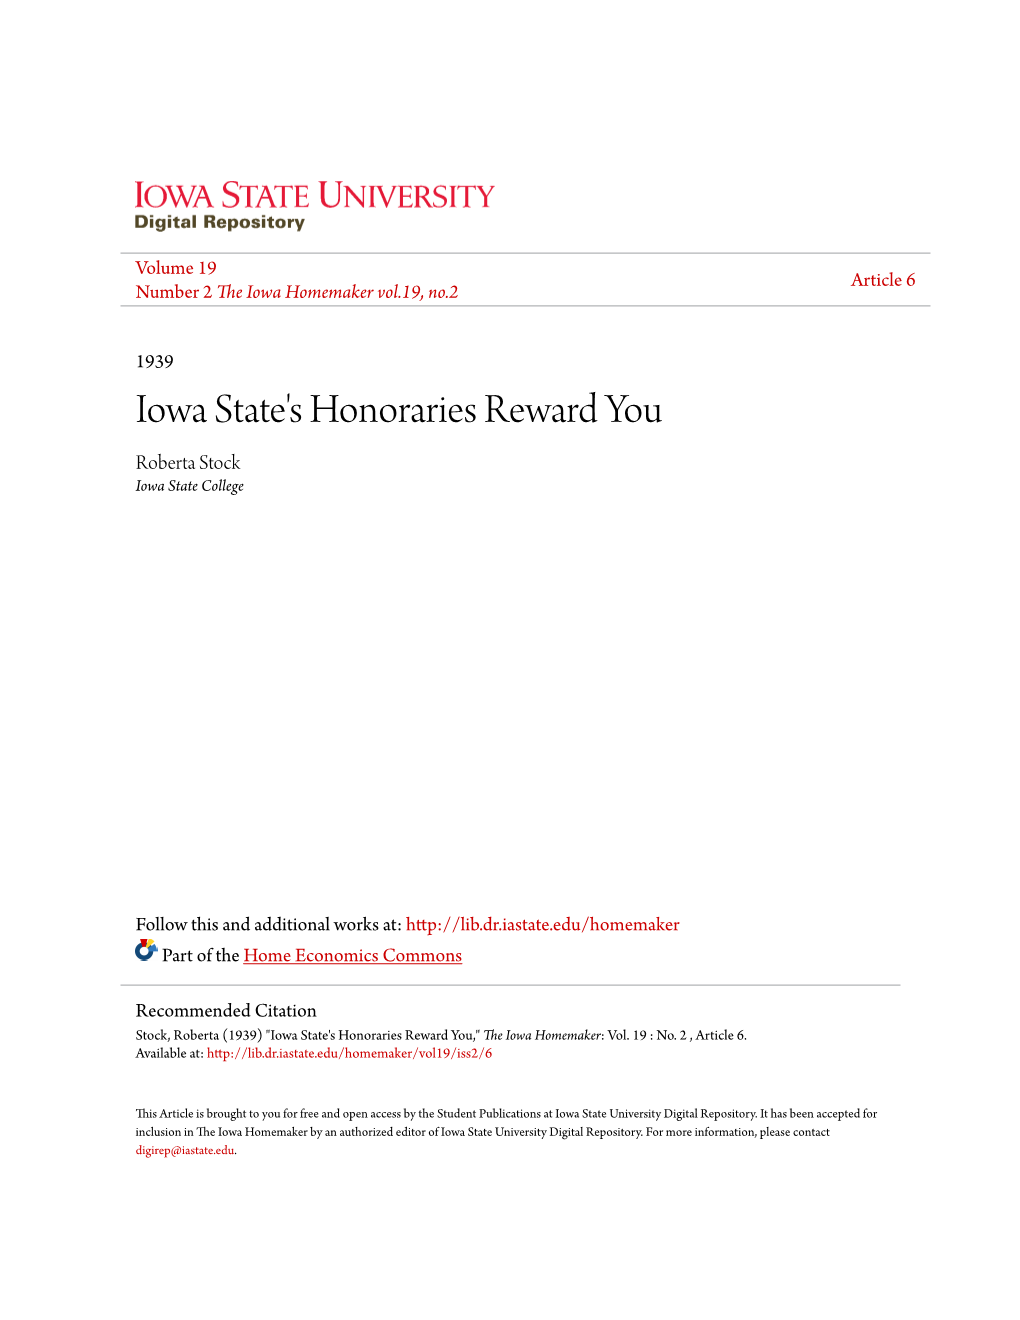 Iowa State's Honoraries Reward You Roberta Stock Iowa State College